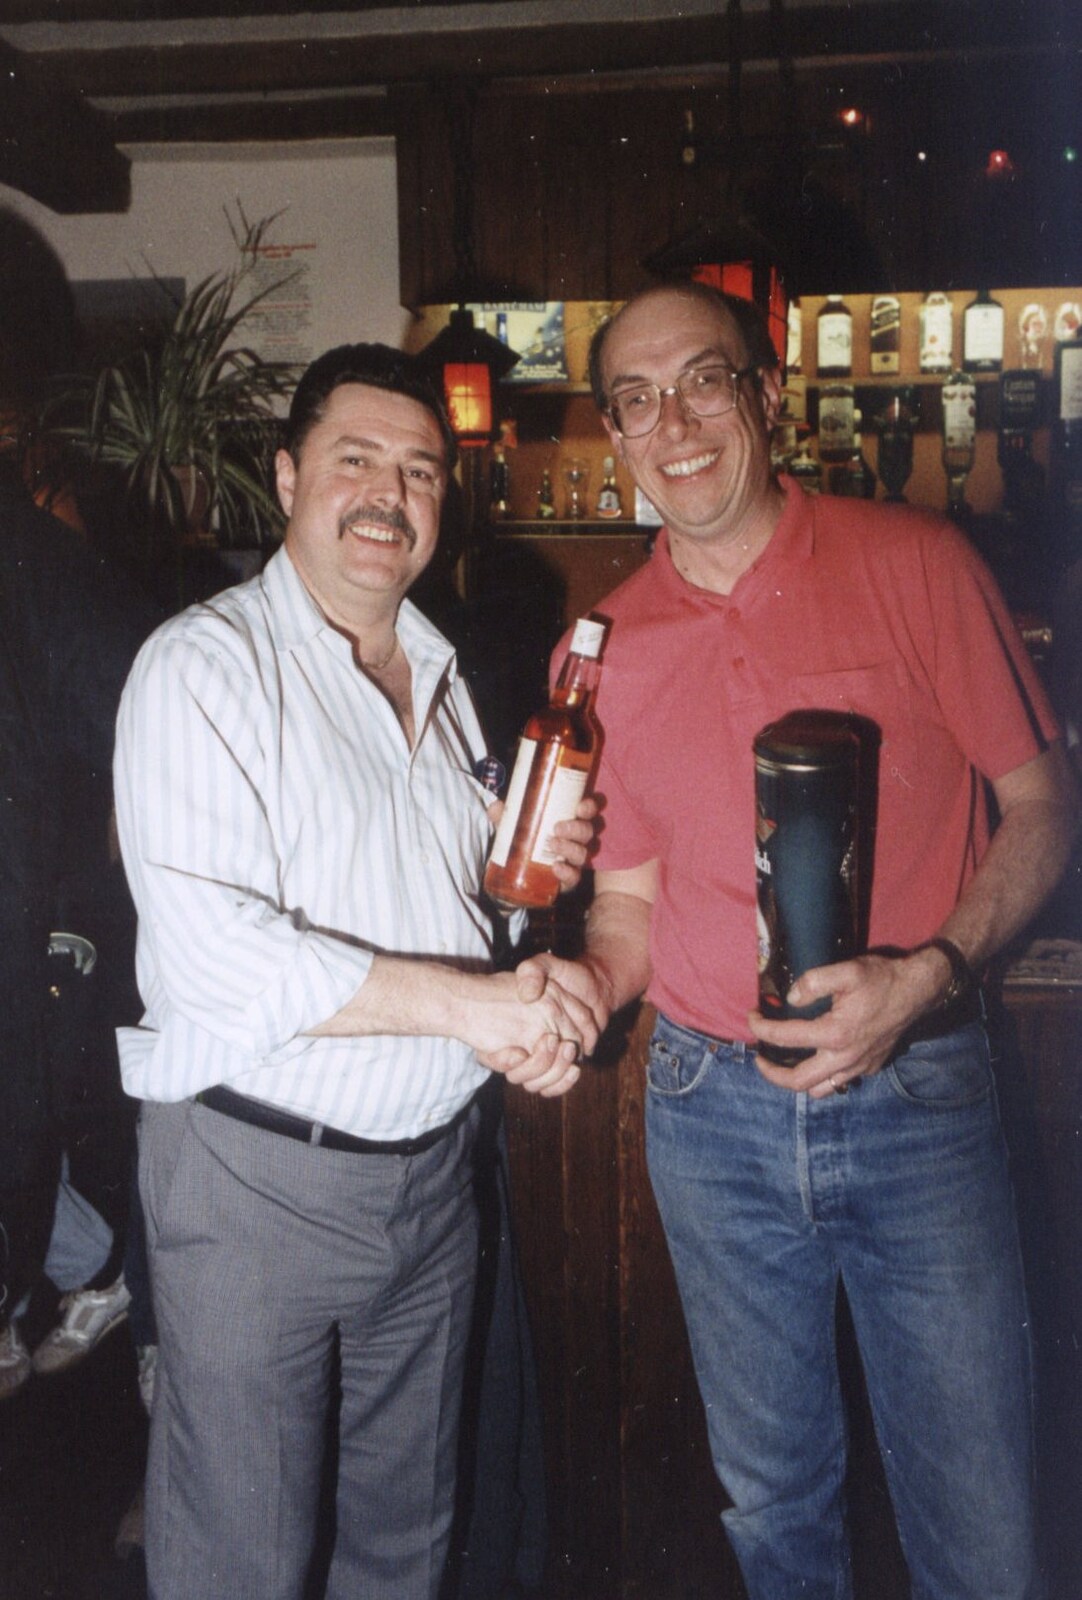 BPCC Printec Reunion at The Brome Swan, Suffolk - 20th February 1991: John Chapman wins a bottle of Glenfiddich